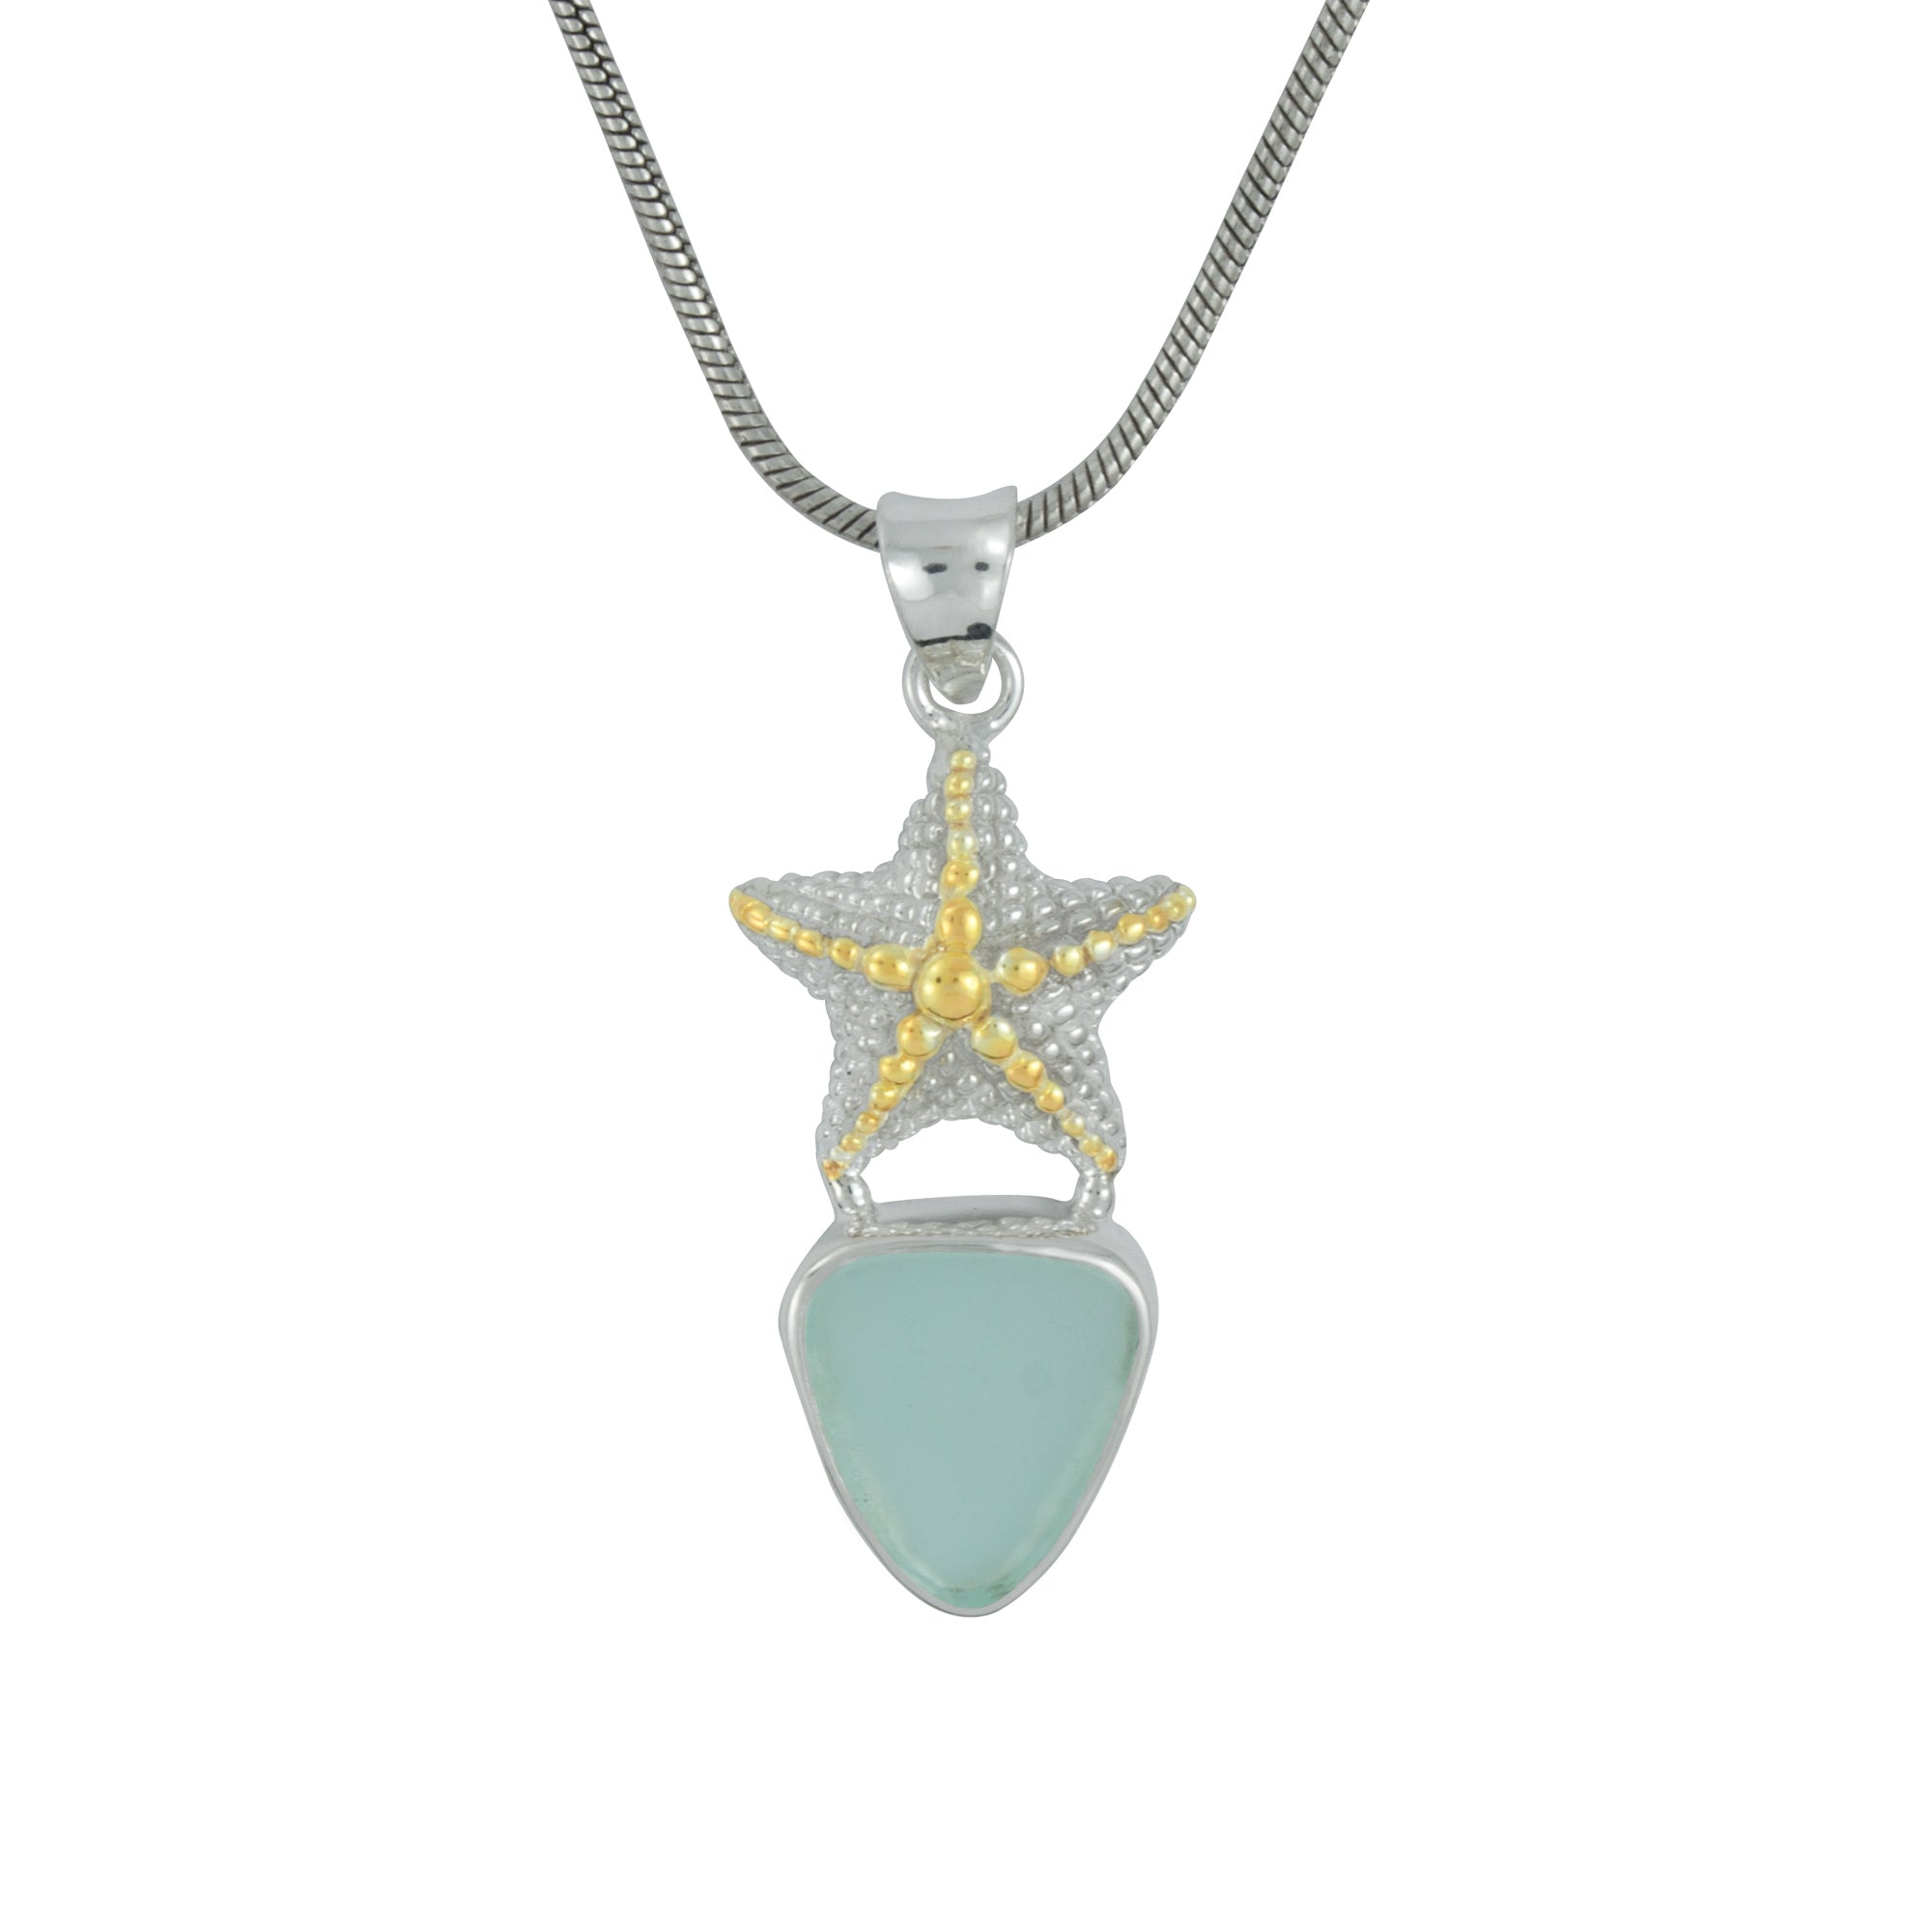 Gorgeous Starfish Pendant with Sea Glass